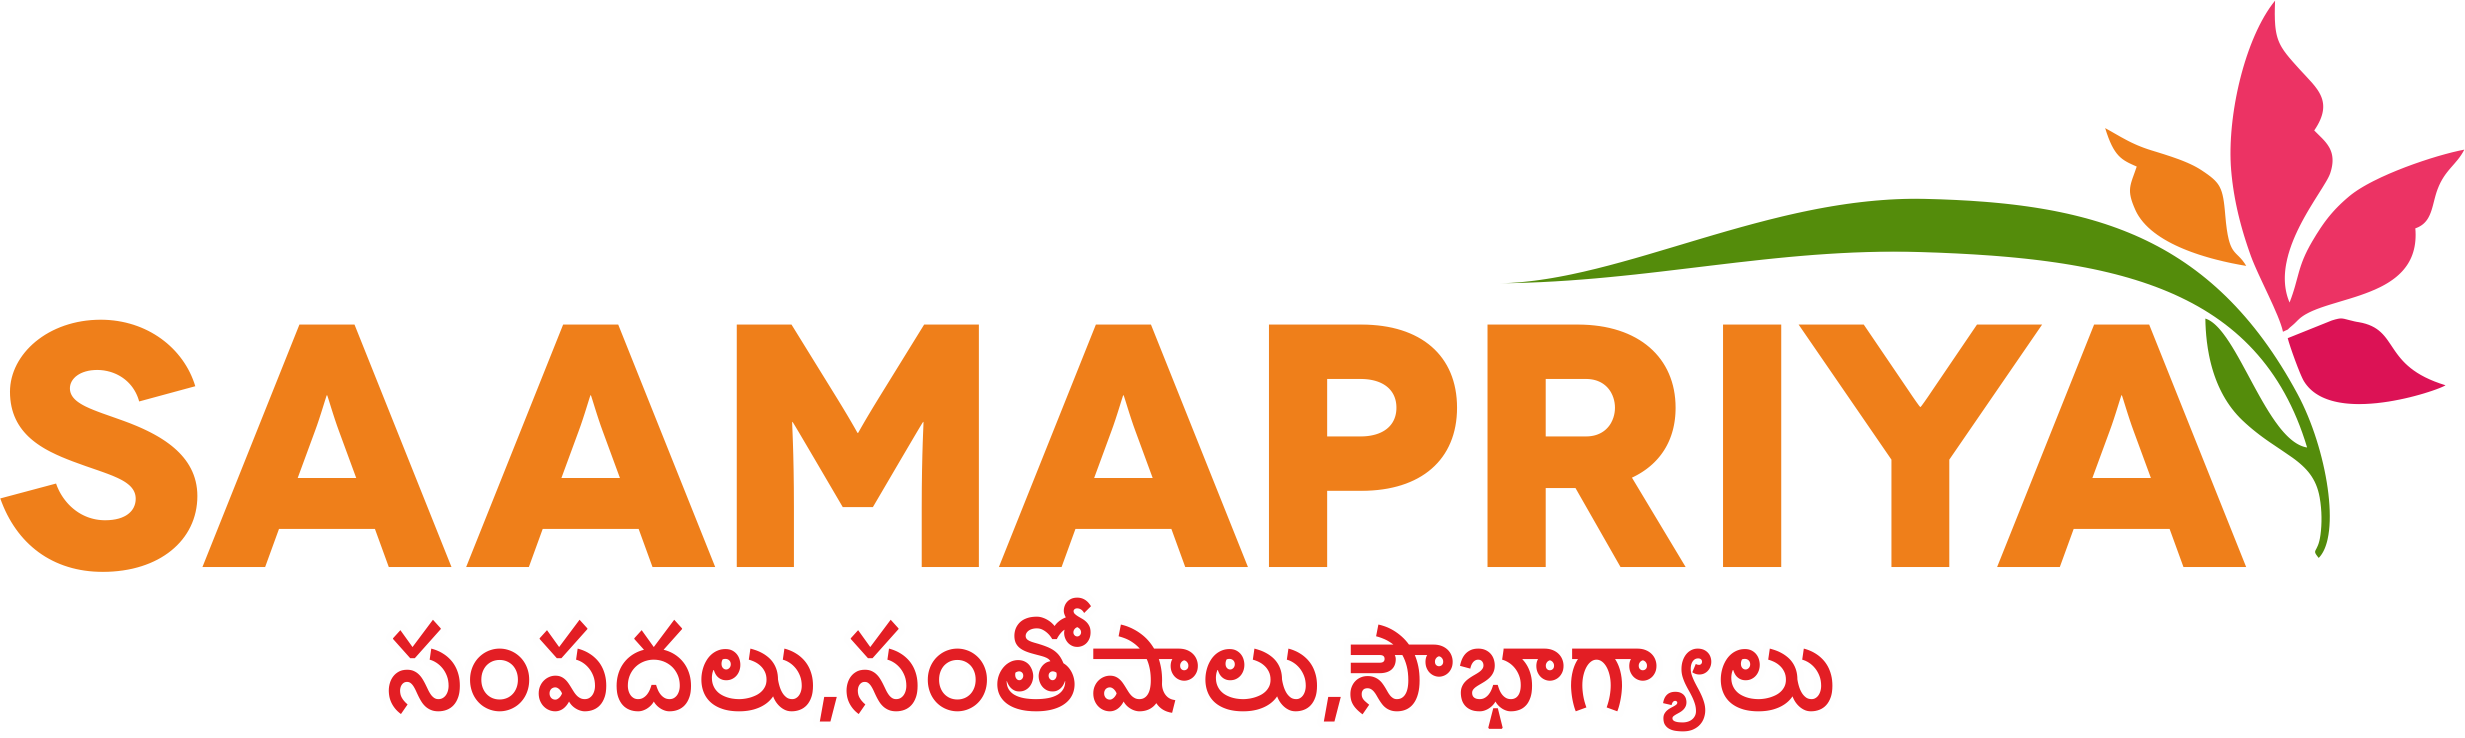 Saamapriya logo